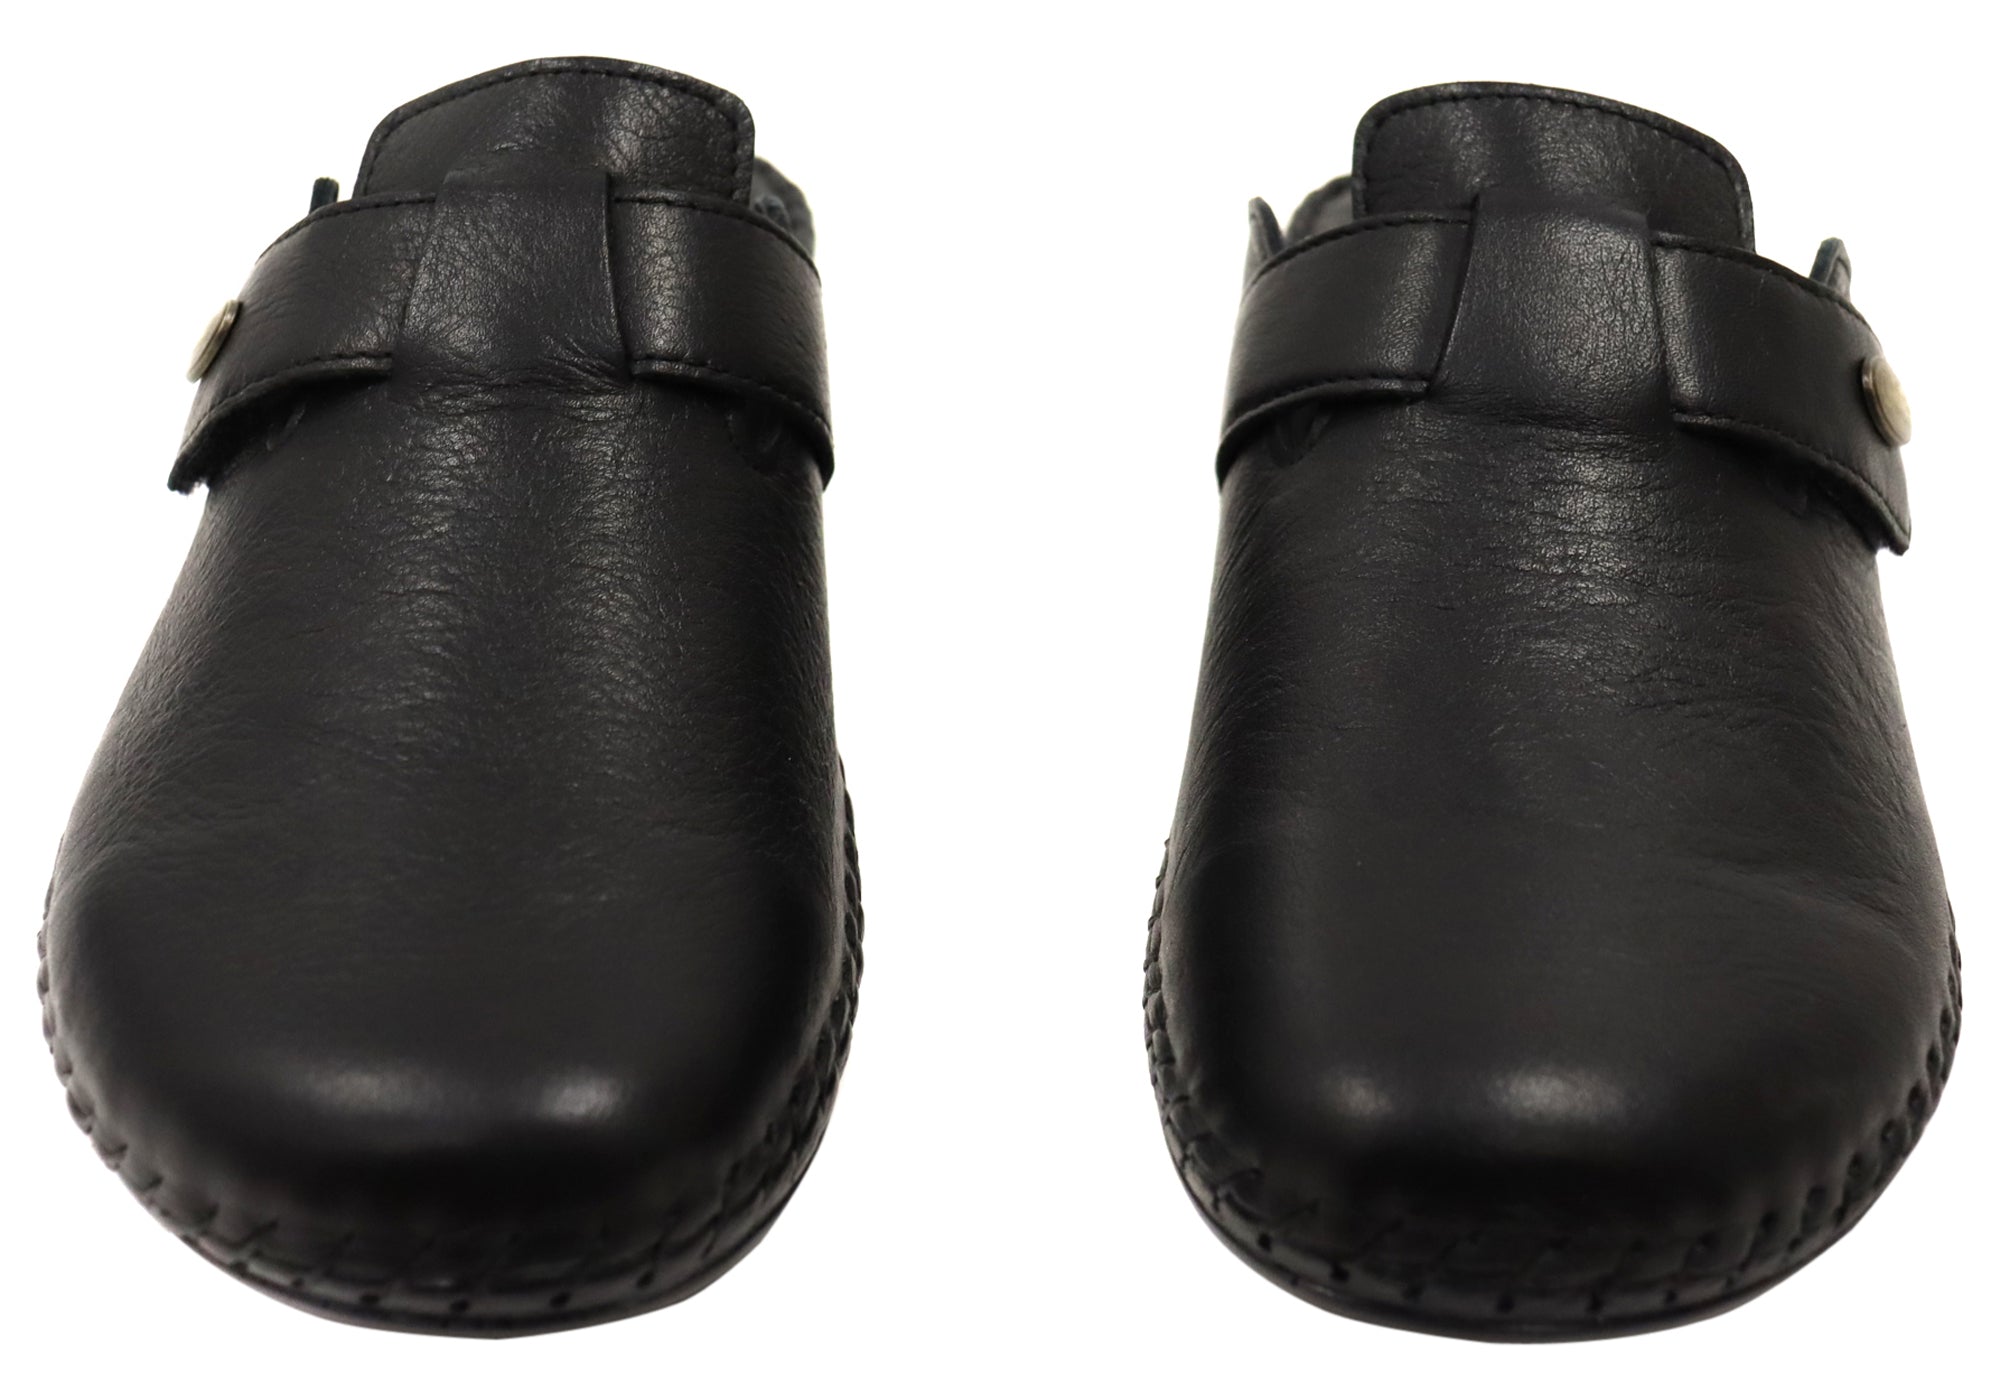 Cabello Comfort Como Womens European Comfortable Leather Mule Shoes